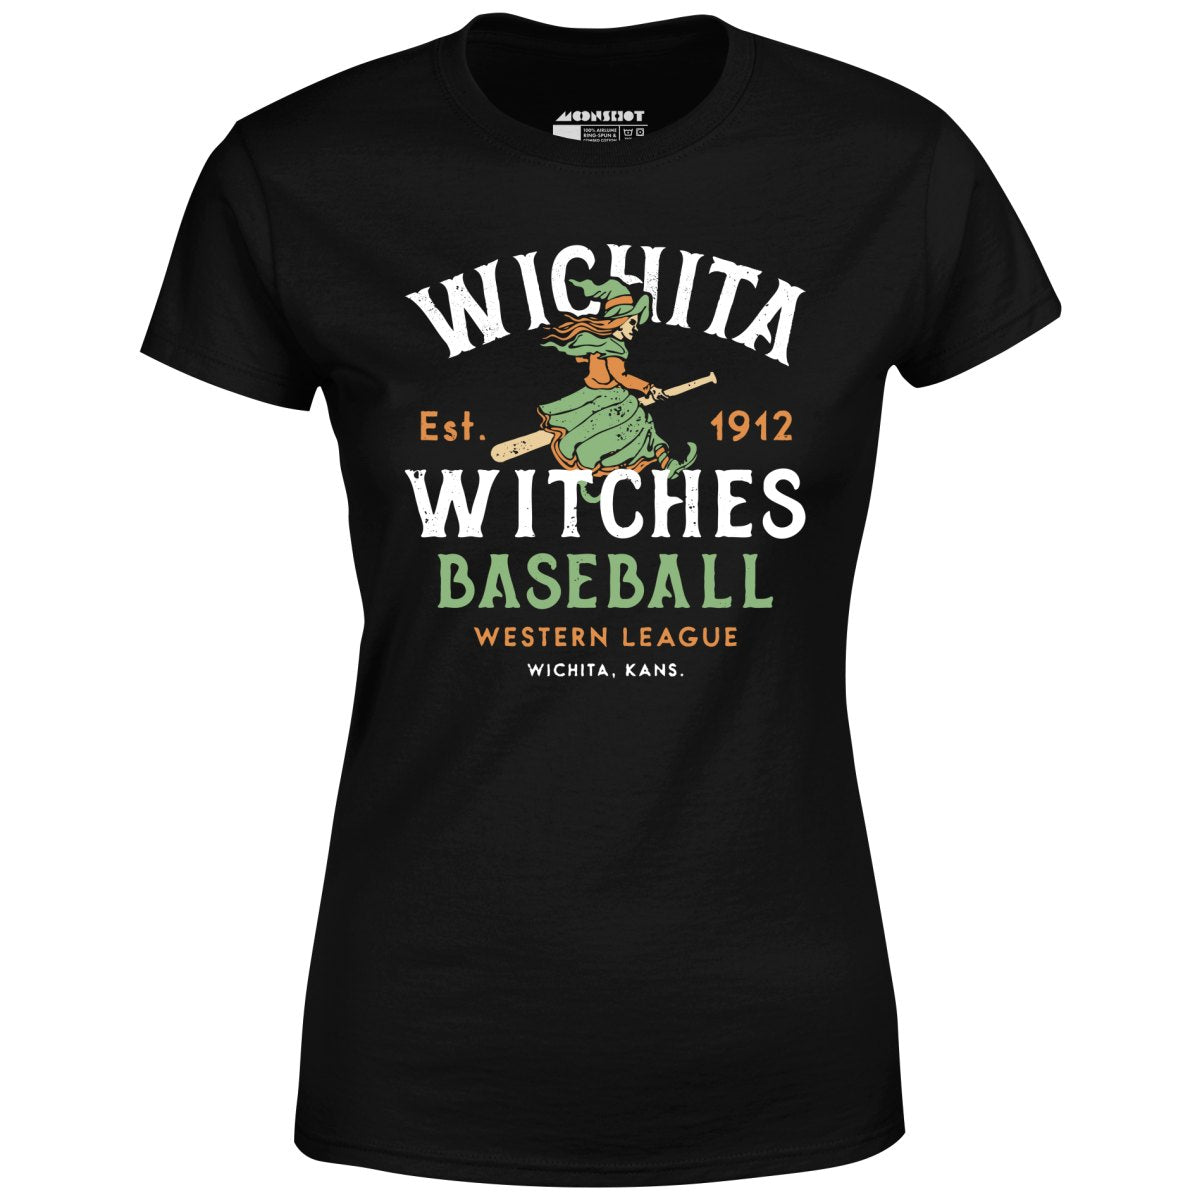 Wichita Witches - Kansas - Vintage Defunct Baseball Teams - Women's T-Shirt